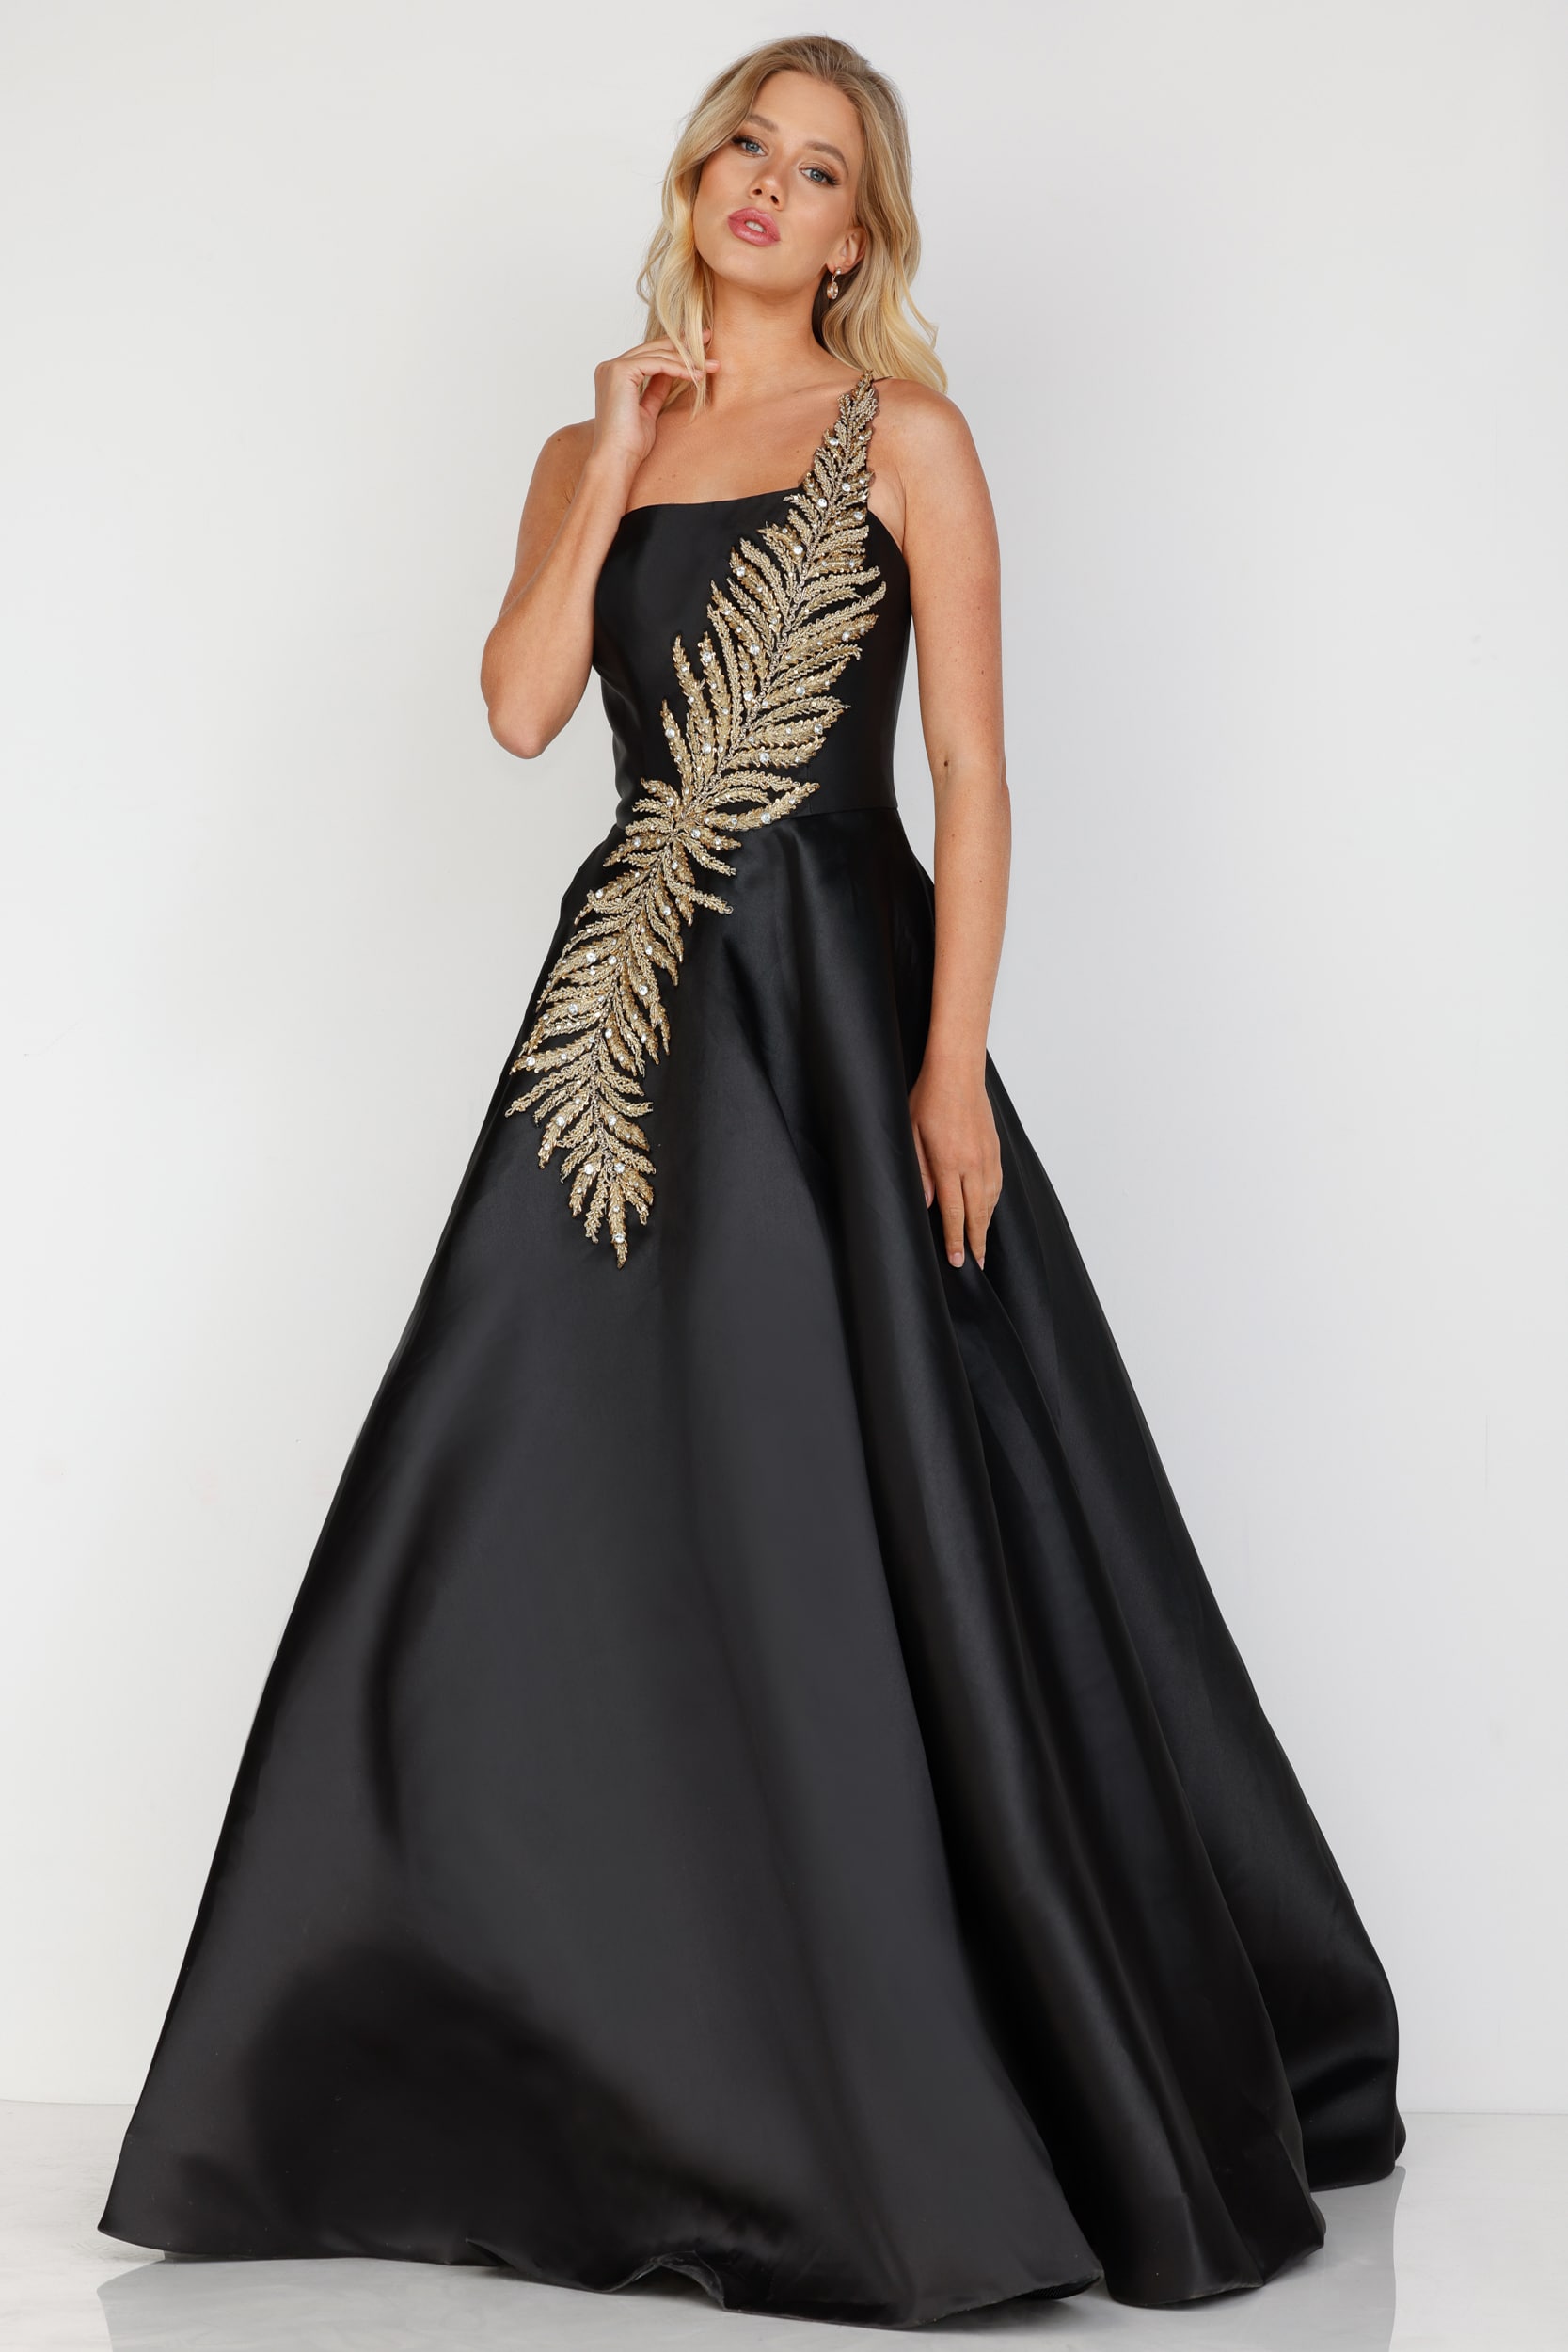 Frau in langem Abendkleid schwarz gold- Pretty Woman Erkelenz